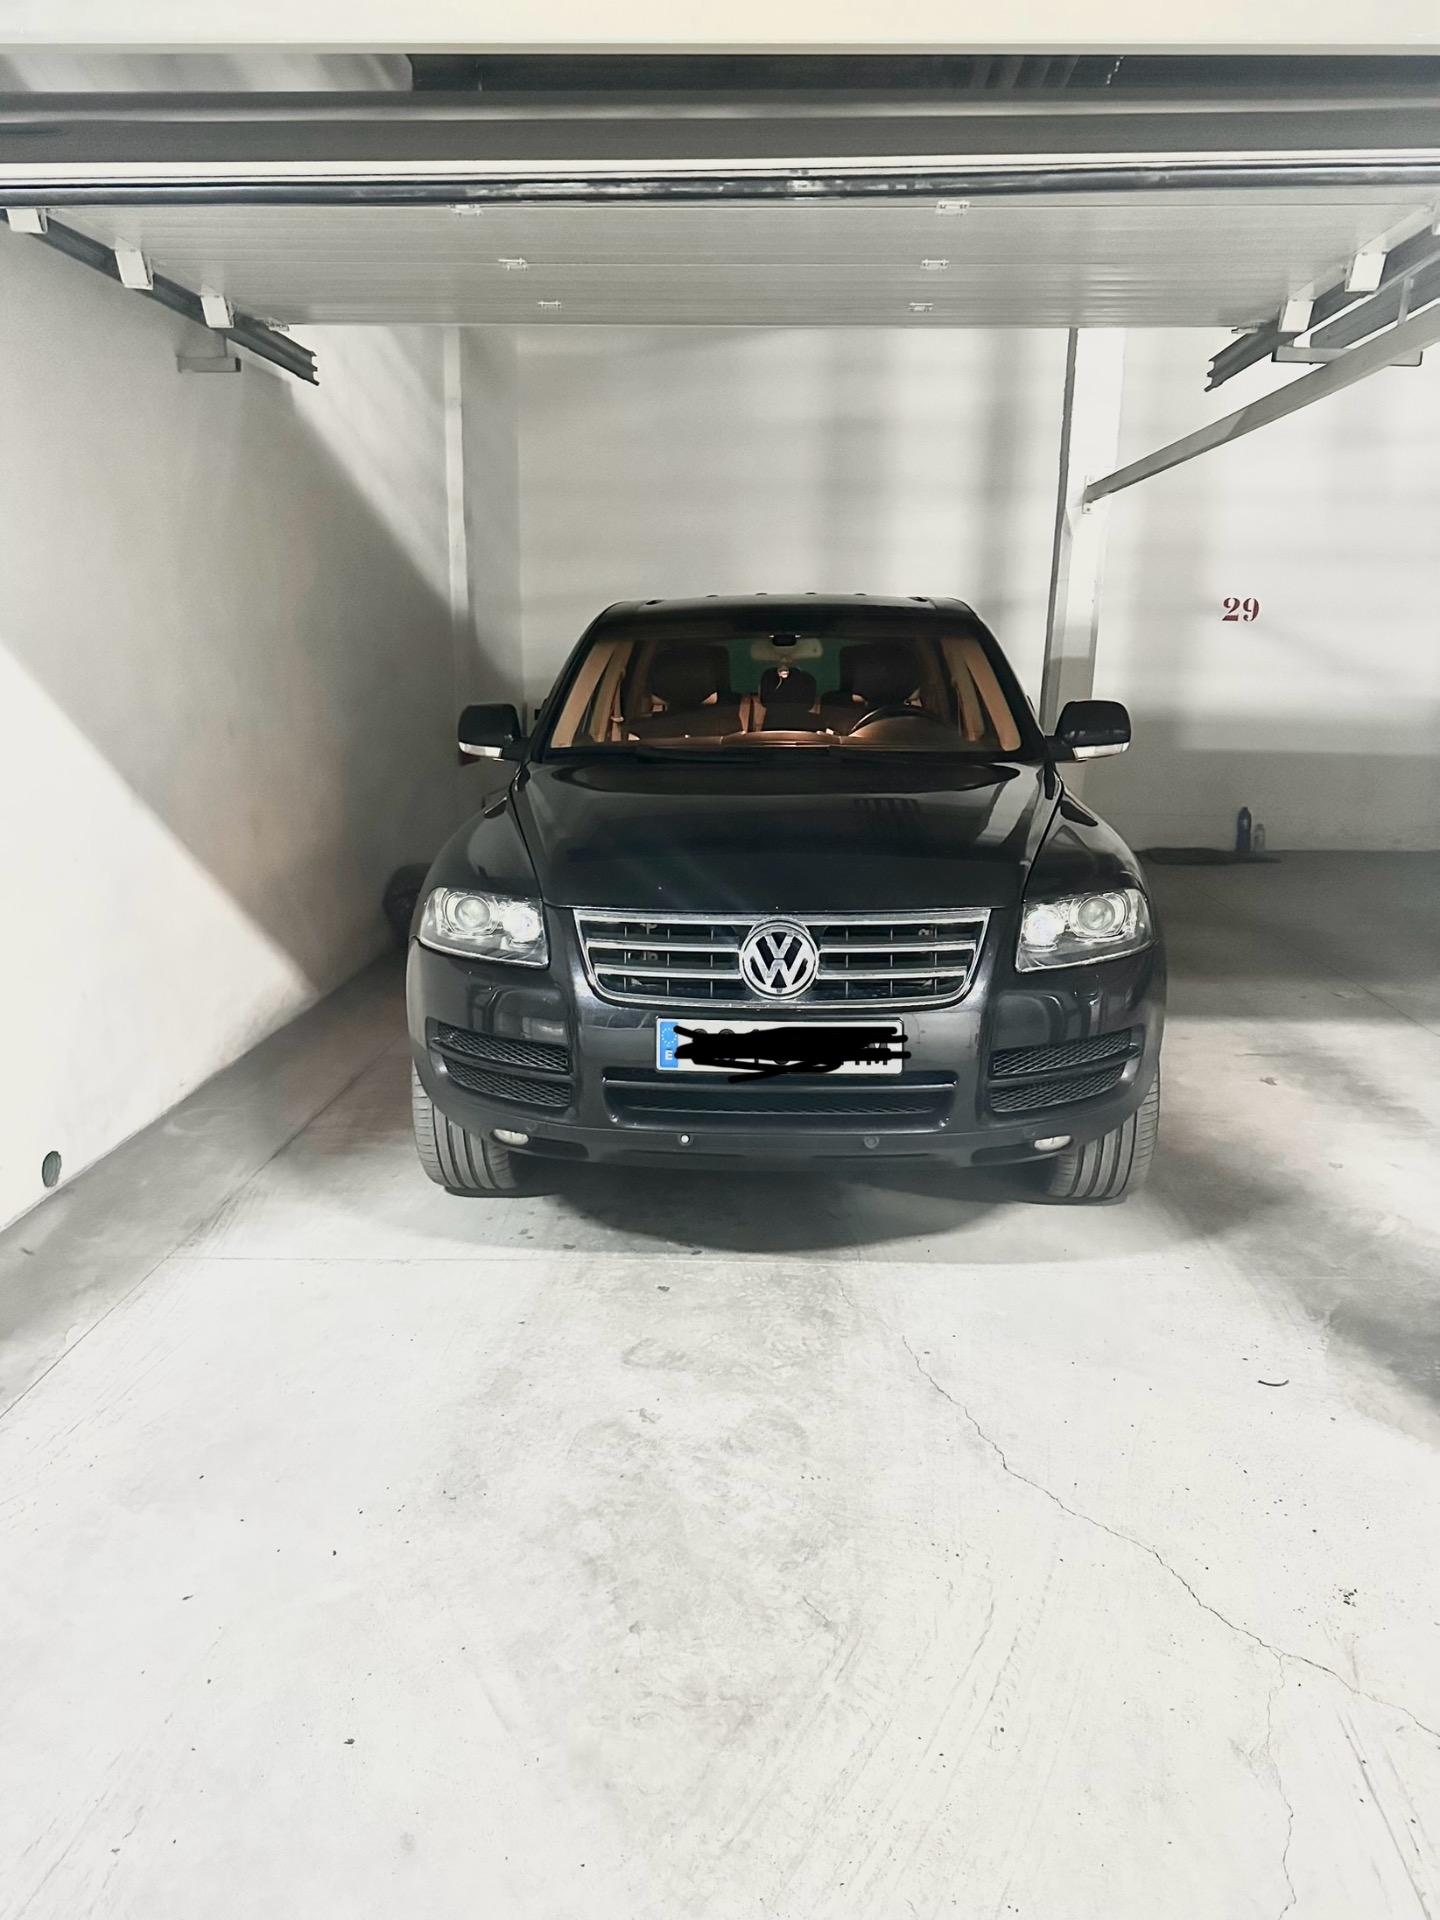 Foto 1 de Cambio Volkswagen touareg por una furgoneta 